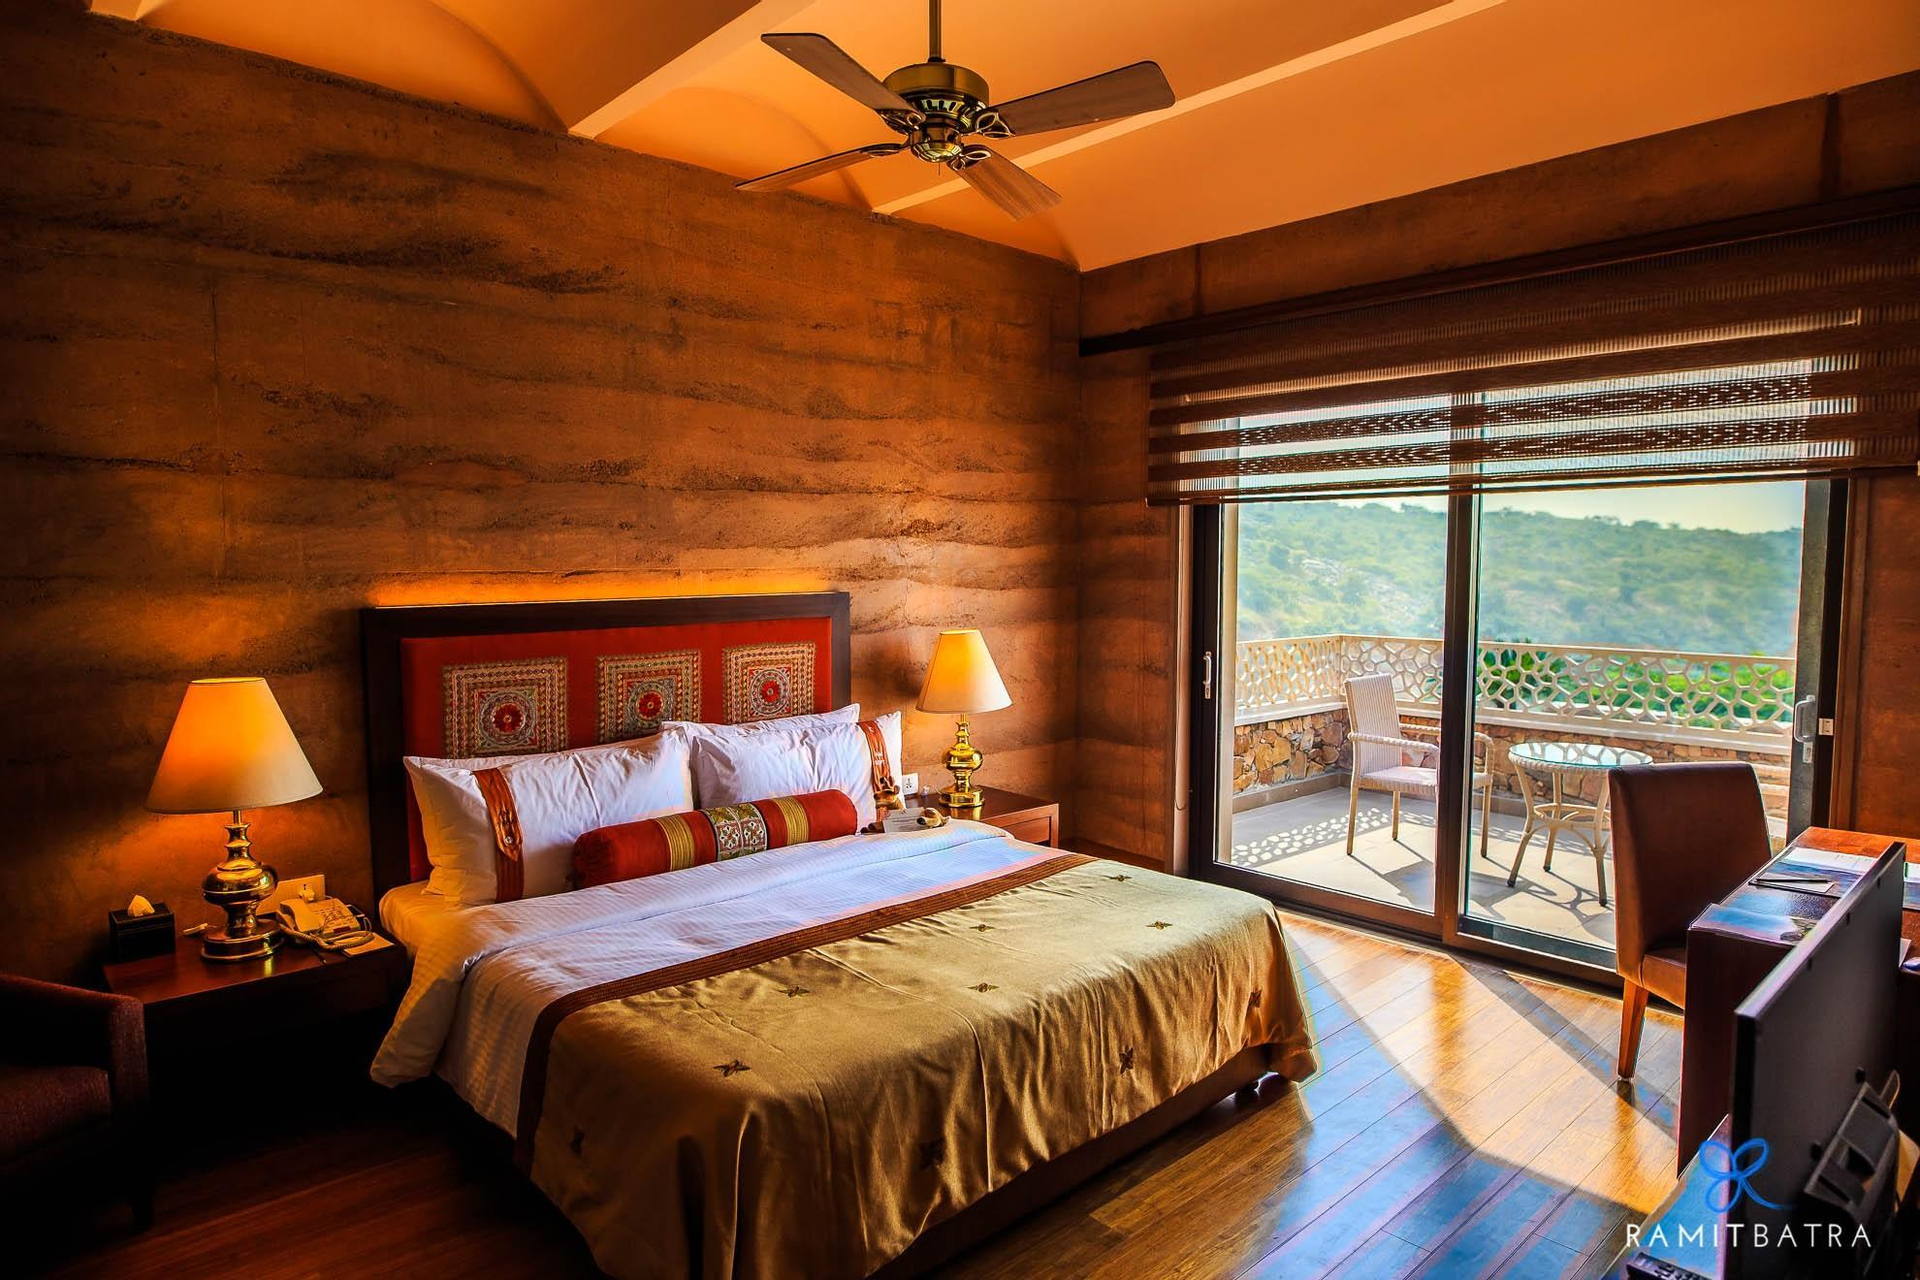 Bedroom 3, The Lalit Mangar, Faridabad